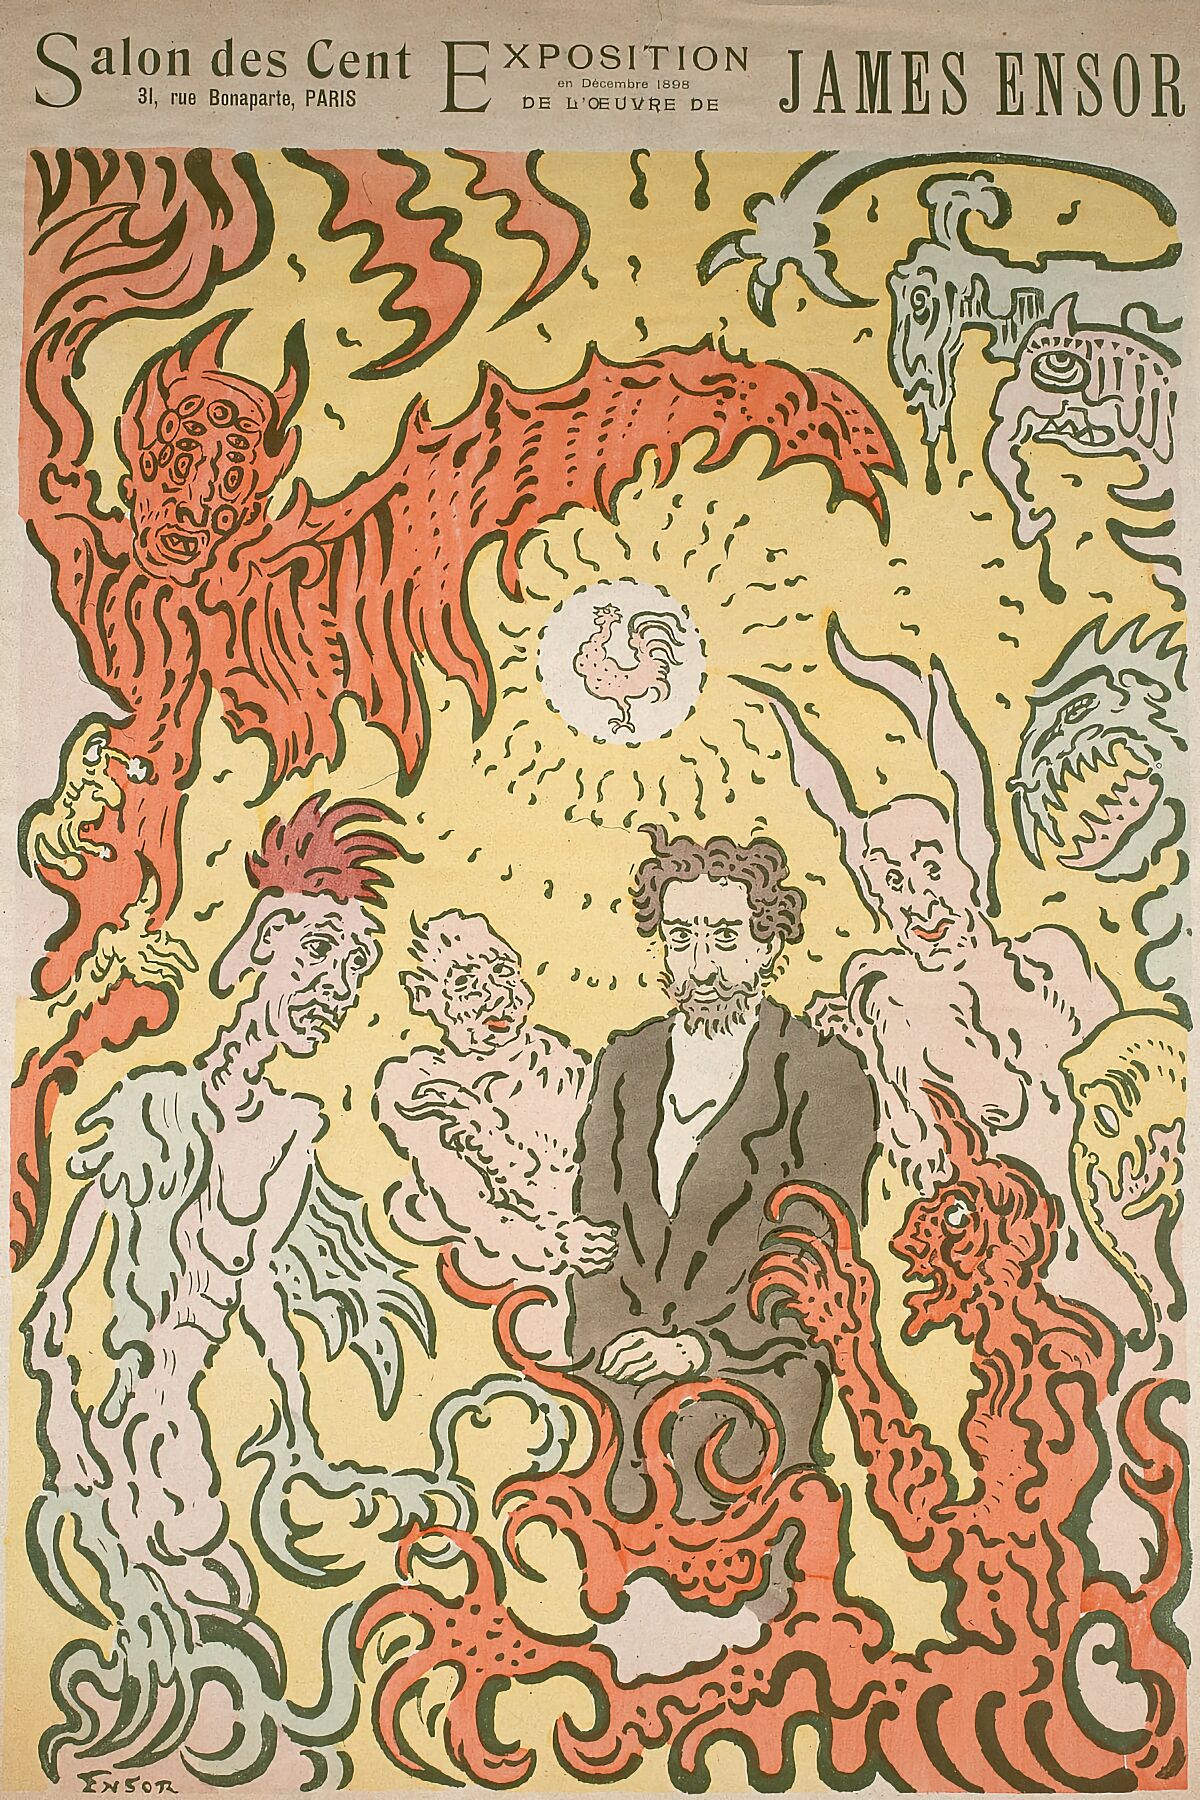 Demons Teasing Me, Poster for the James Ensor Exhibition at the Salon des Cent in Paris - 1898